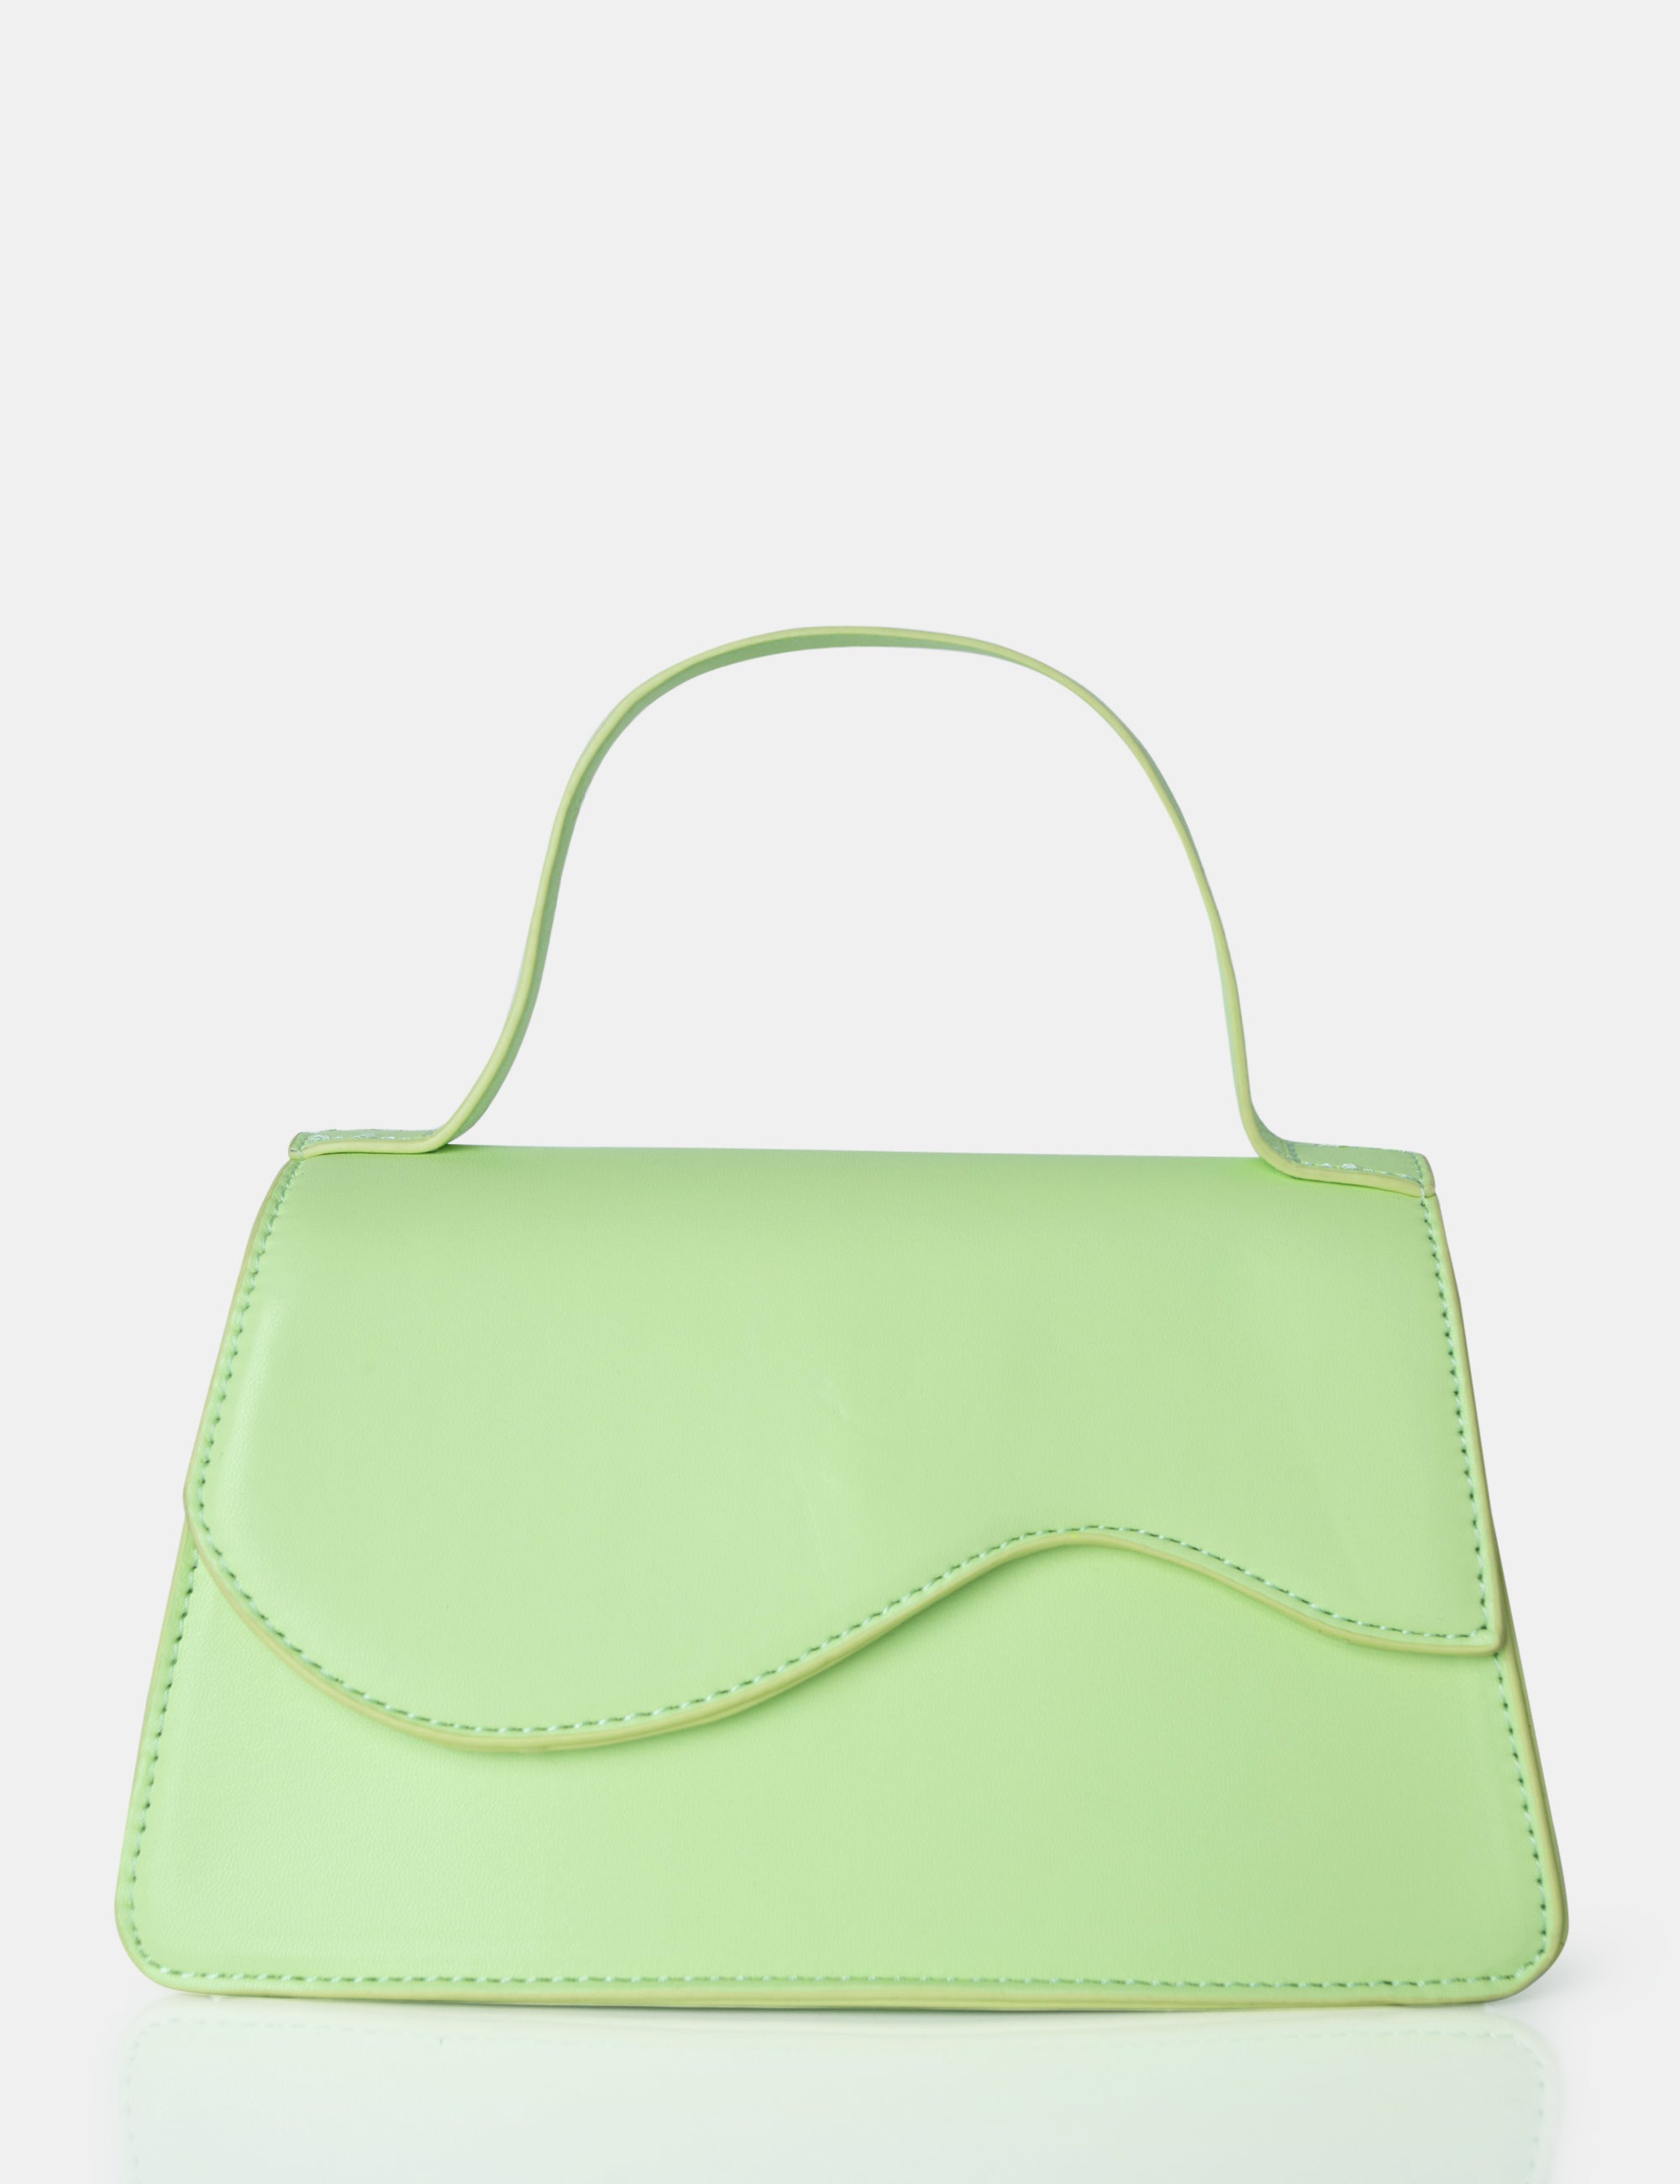 The Polly Soft Lime Croc Top Handle Mini Bag